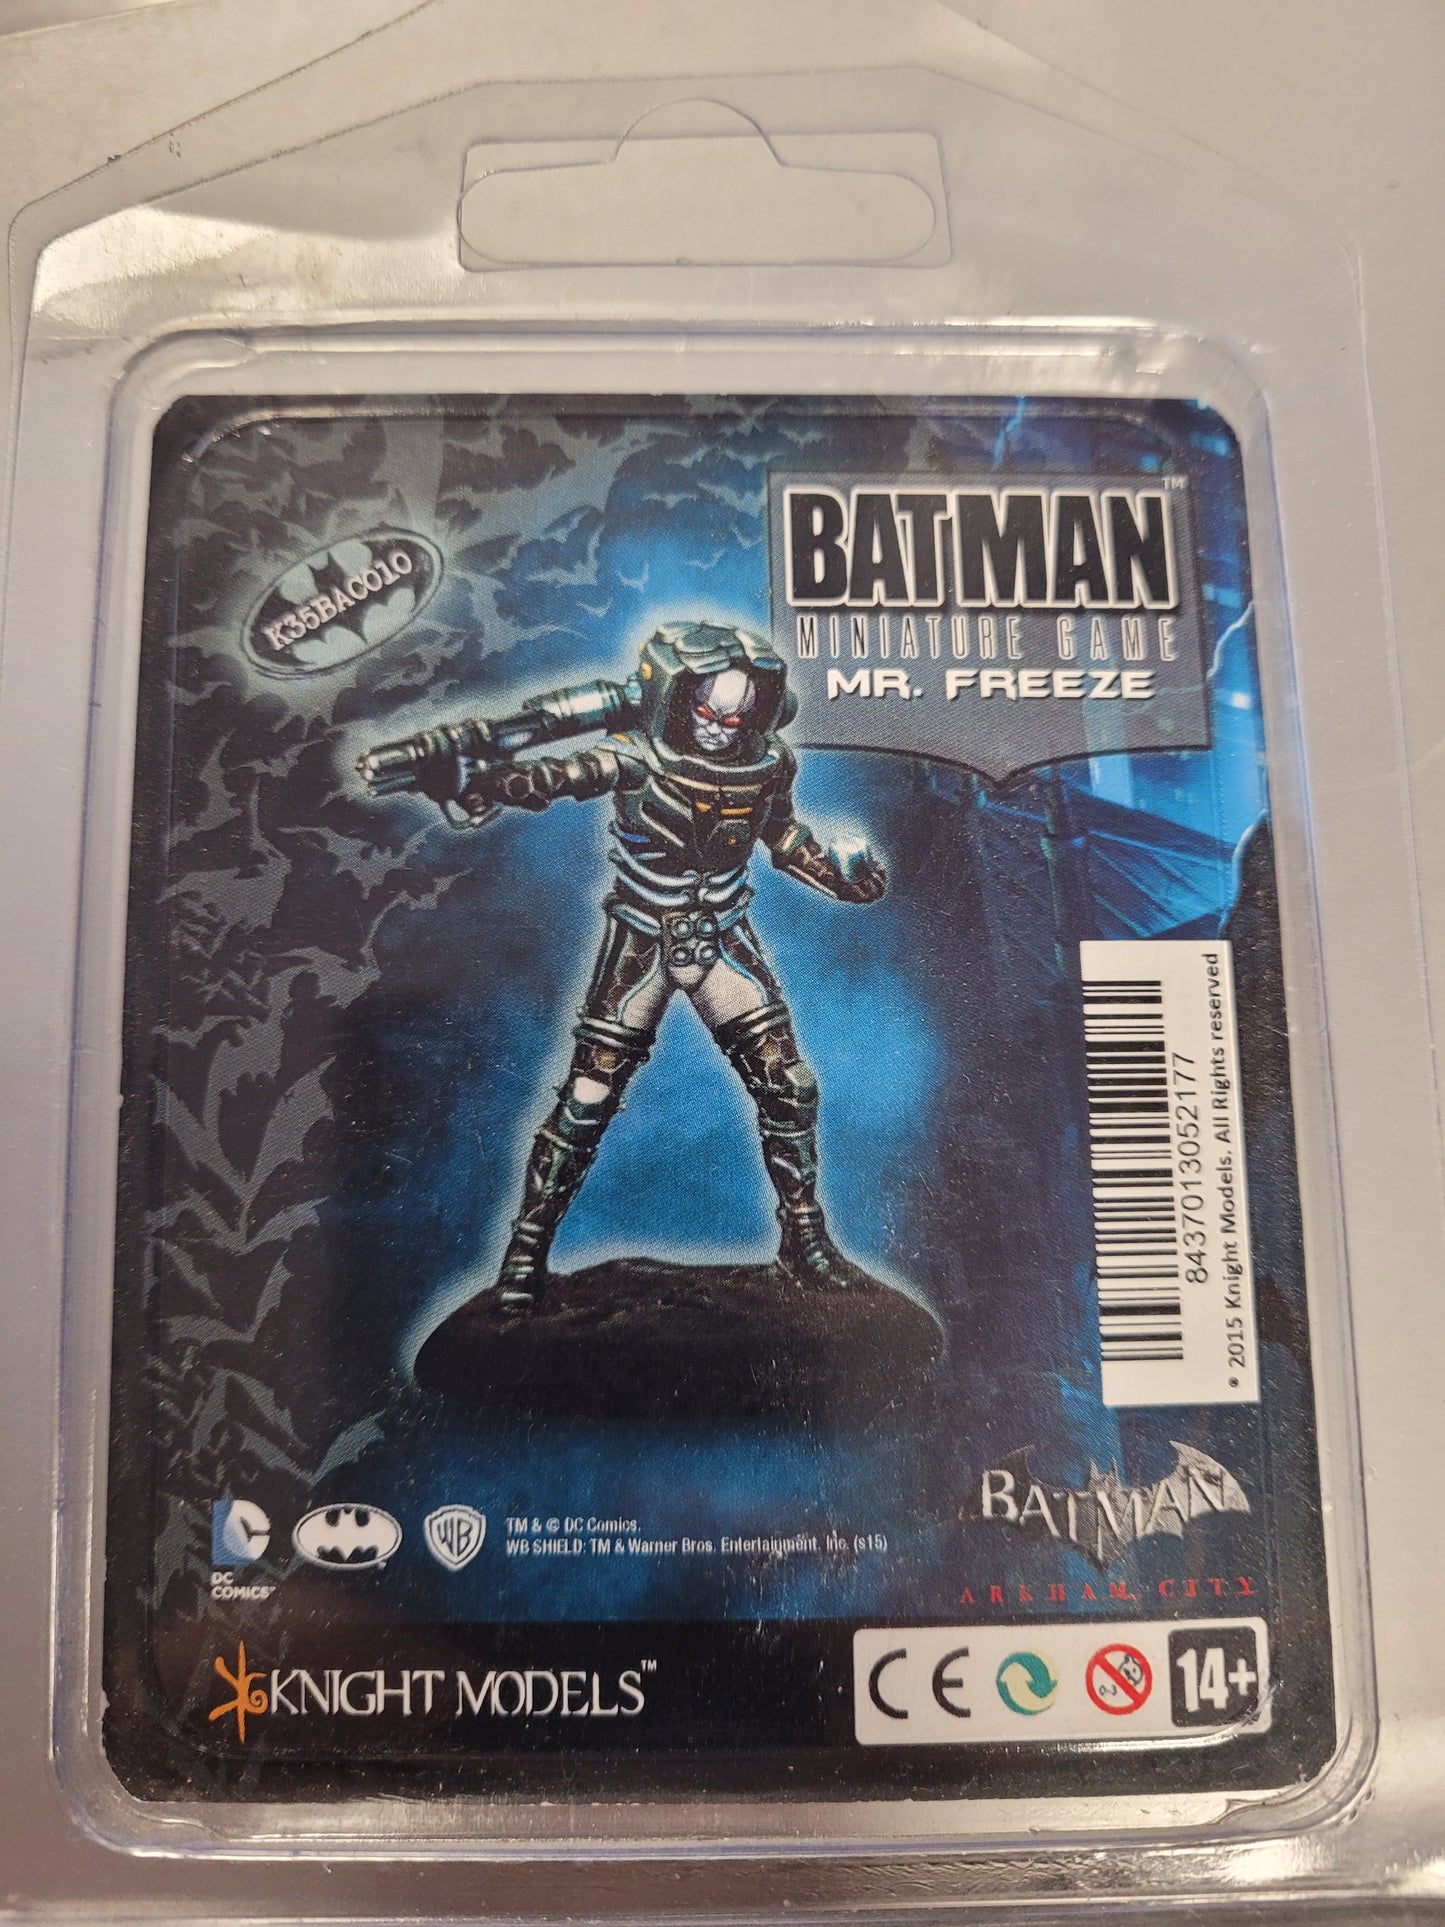 Batman Miniature Games: Mr. Freeze